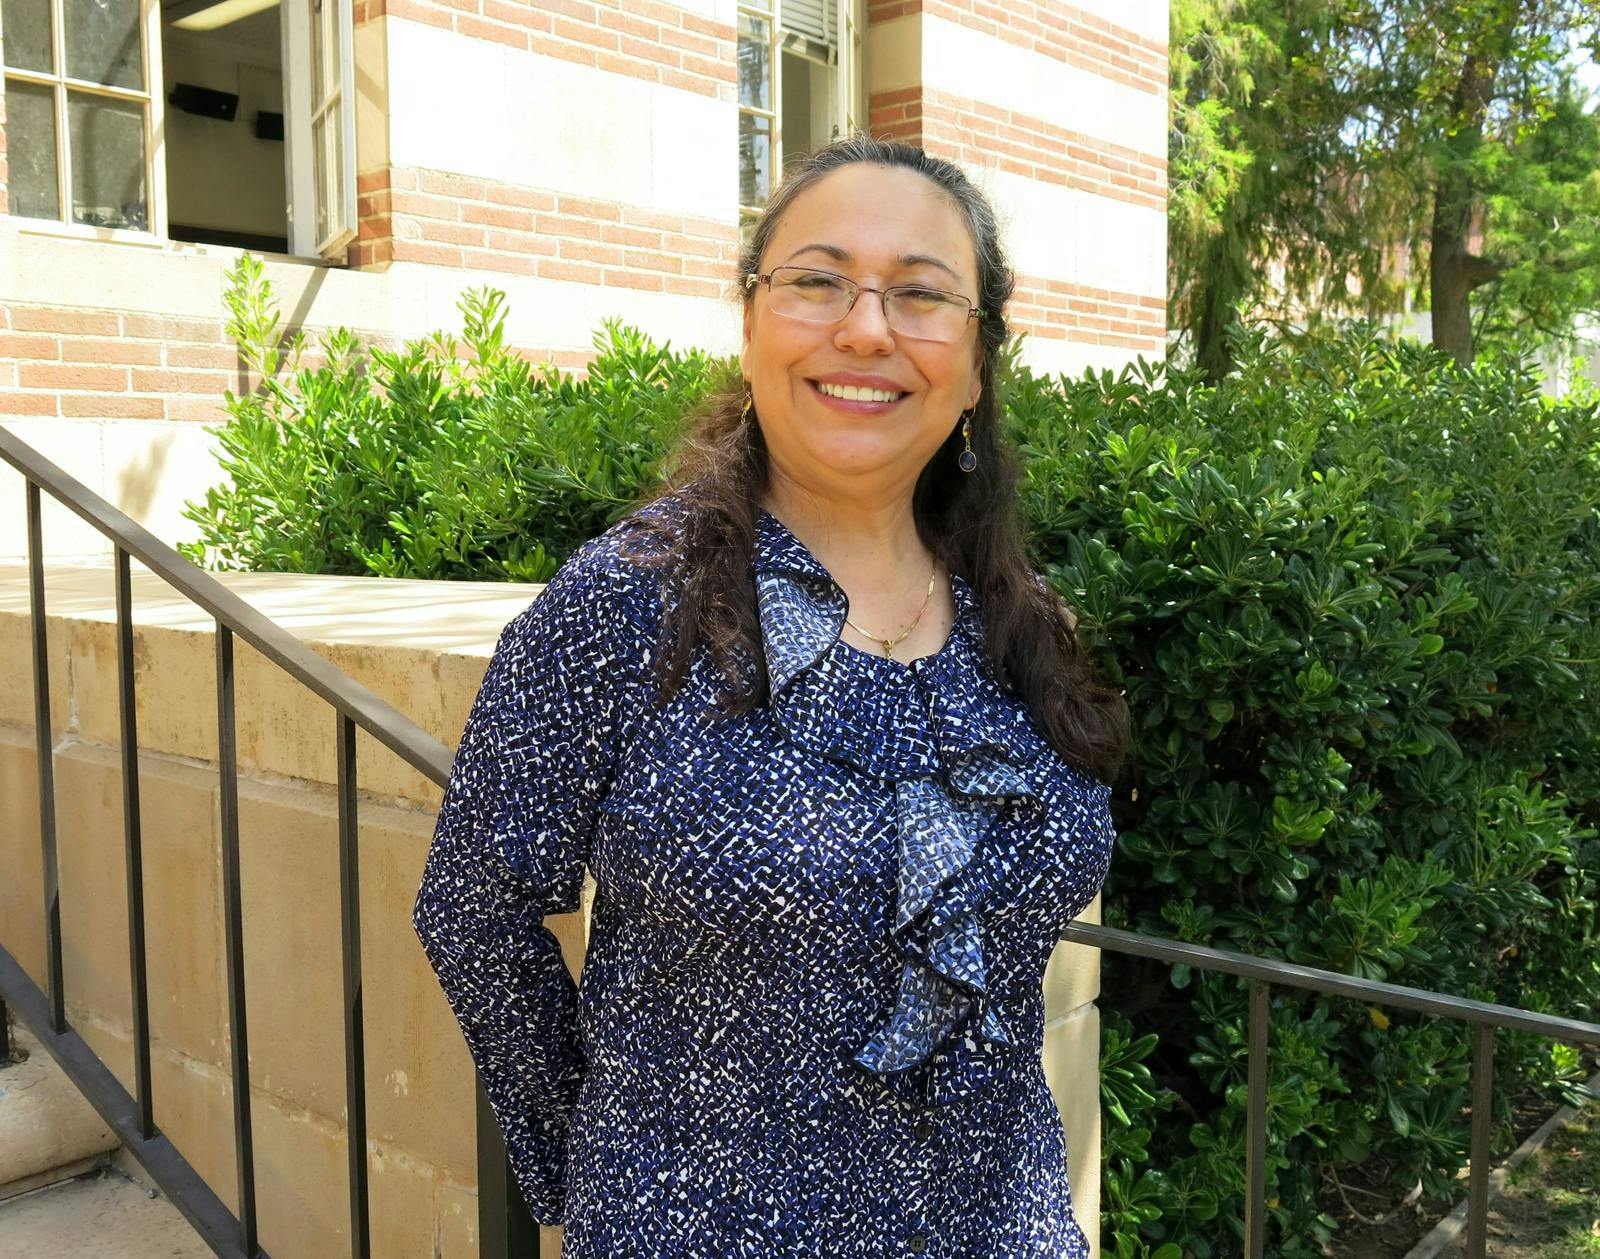 UCLA Professor of Education Sylvia Hurtado